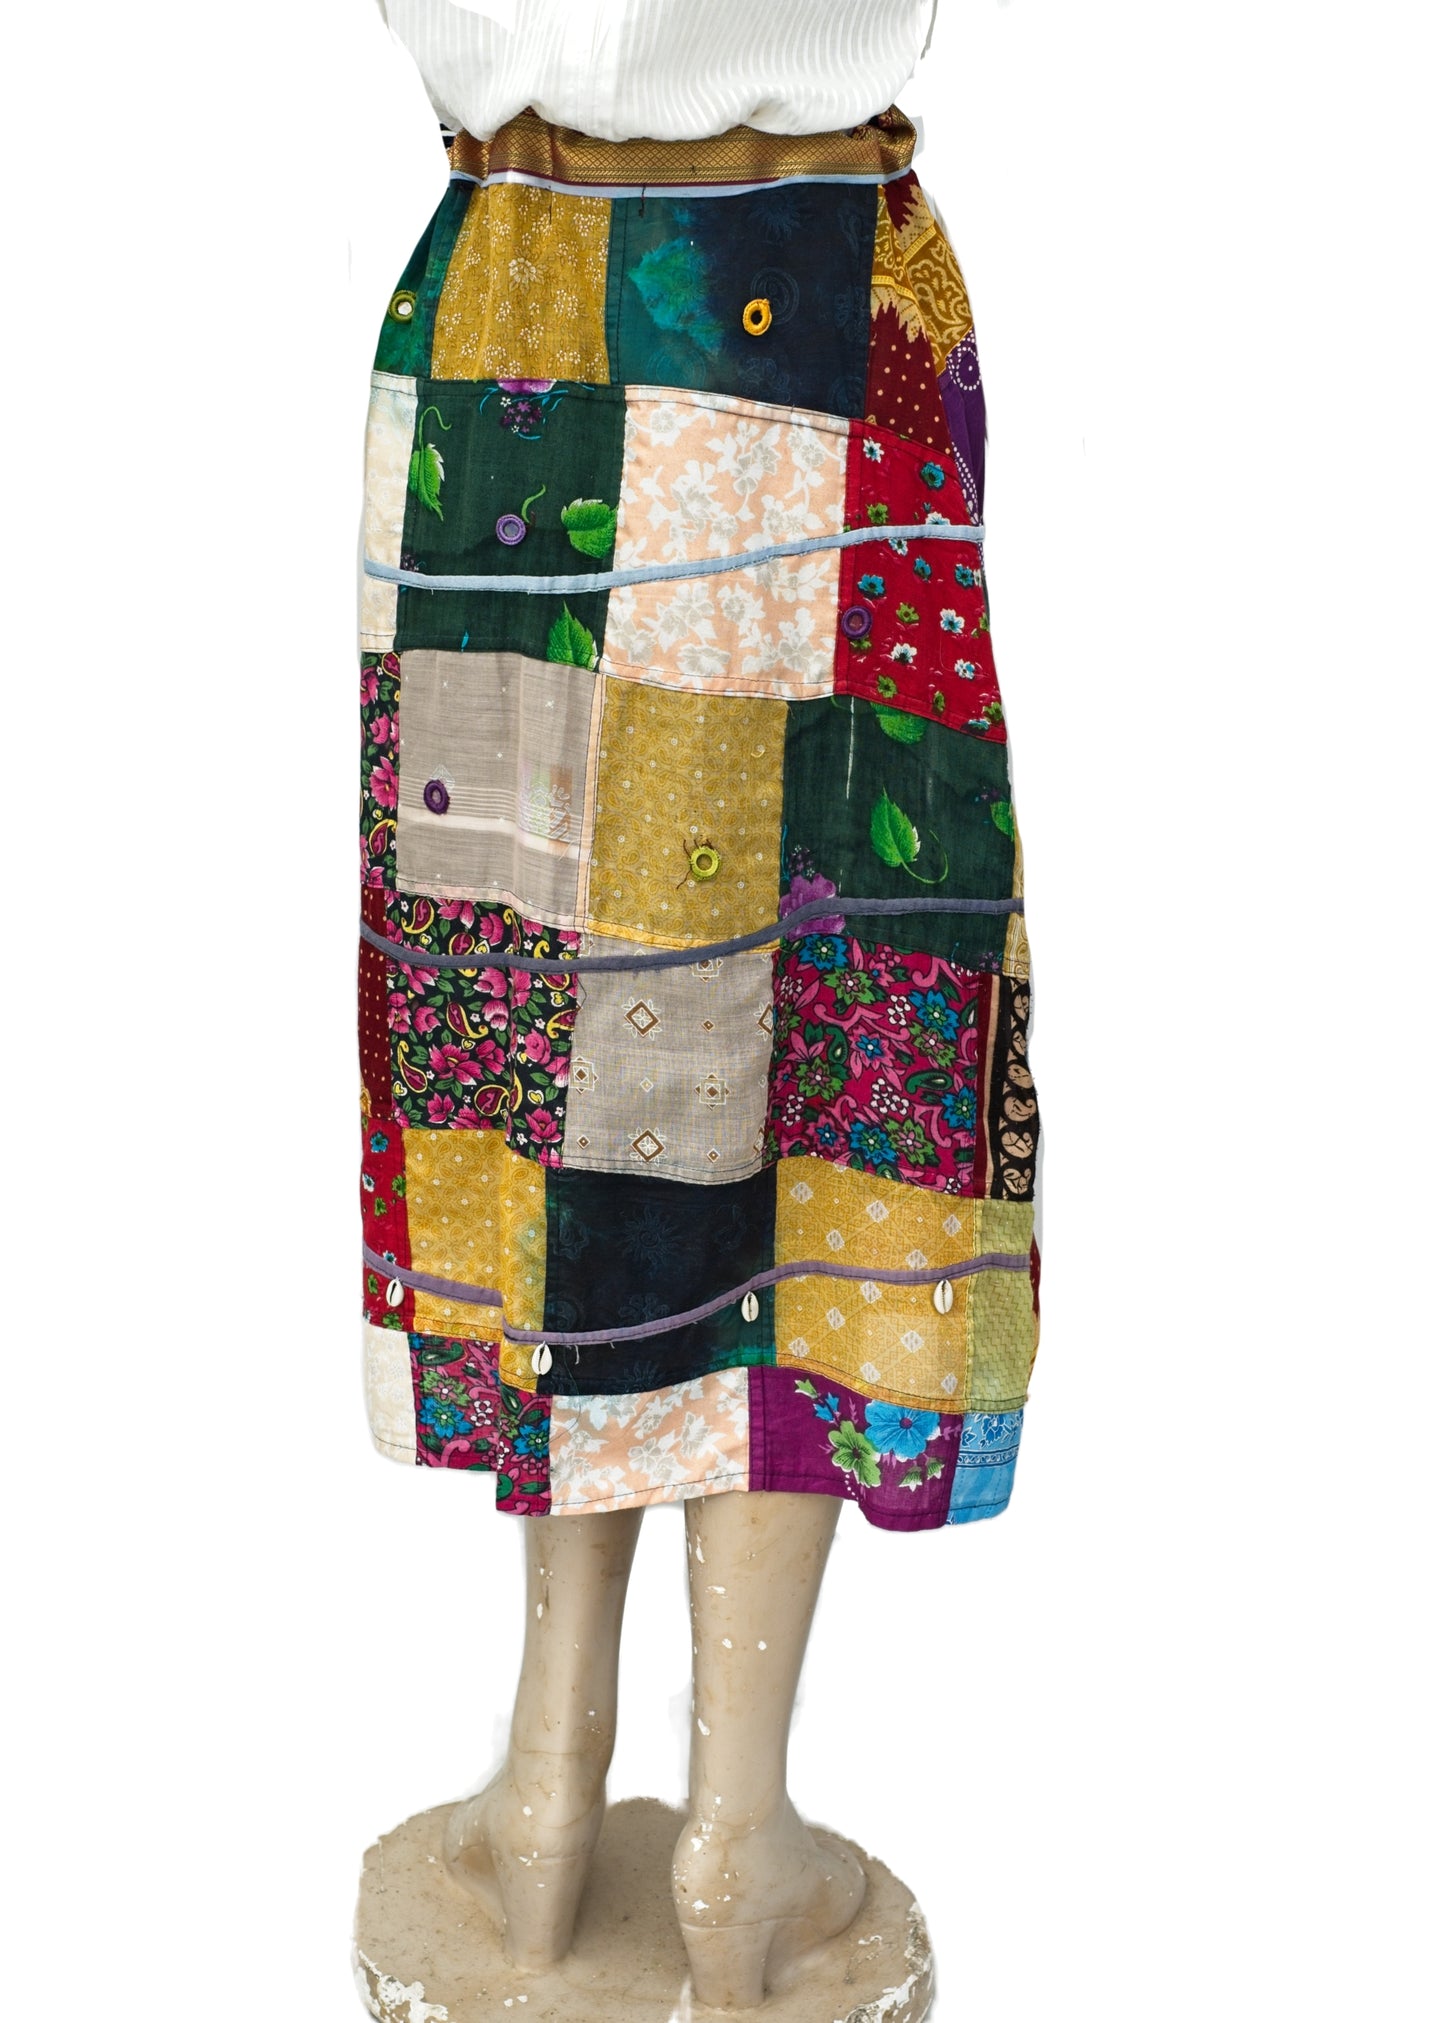 Vintage Hippie Indian Cotton Patchwork Midi Skirt • Cowrie Shells • Mirrors